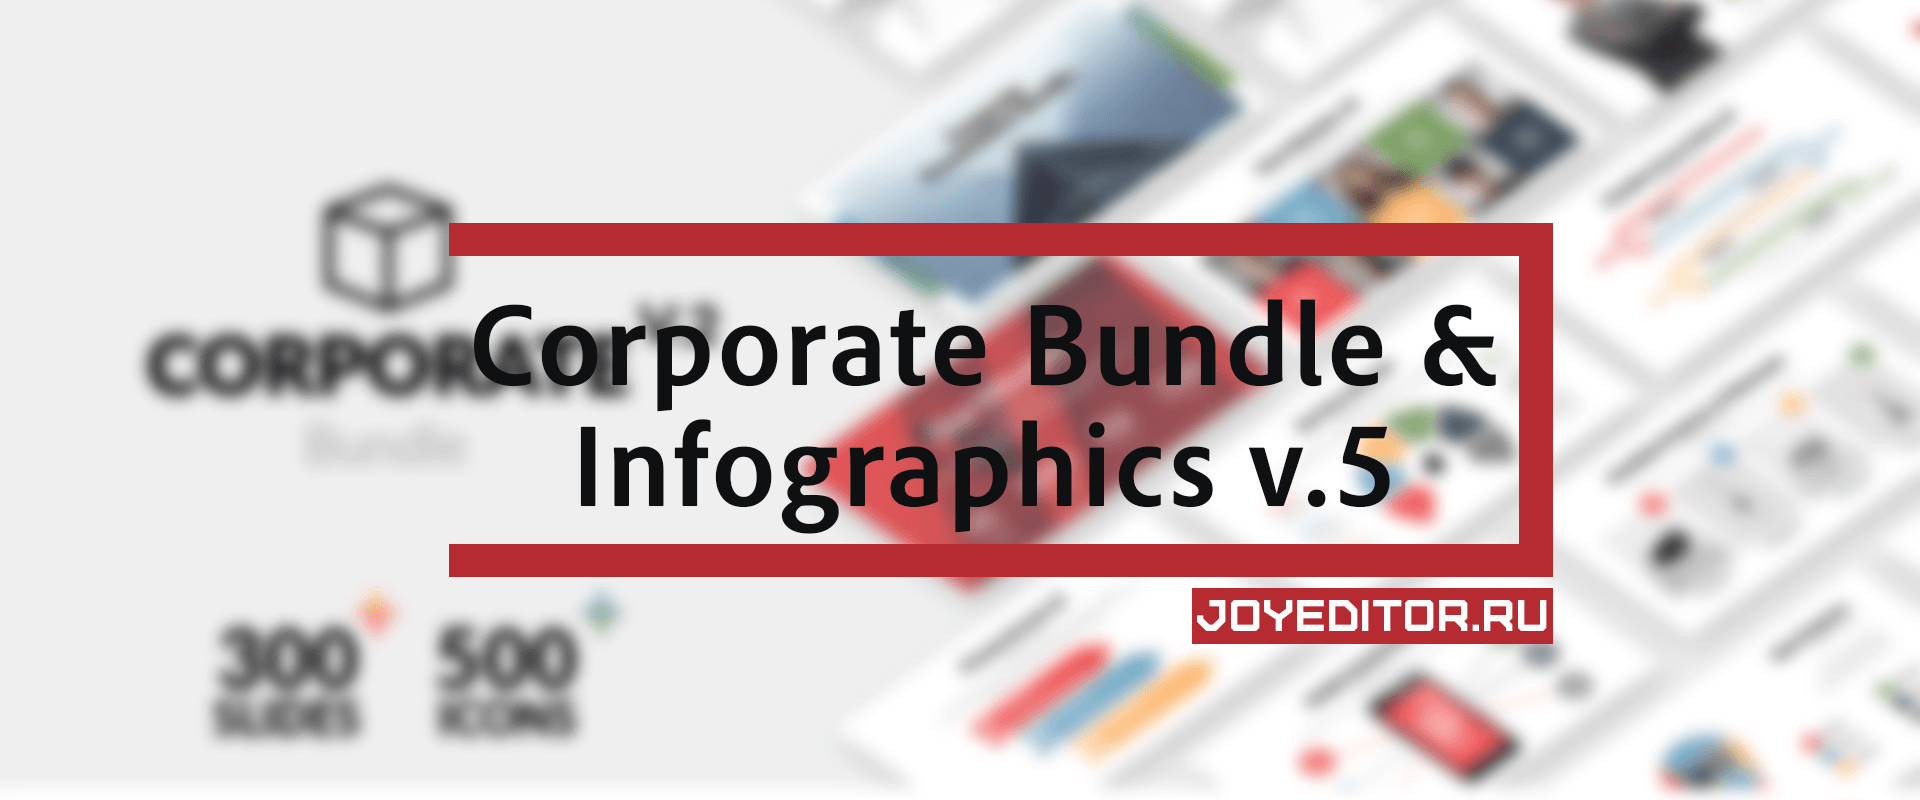 Corporate Bundle & Infographics v.5